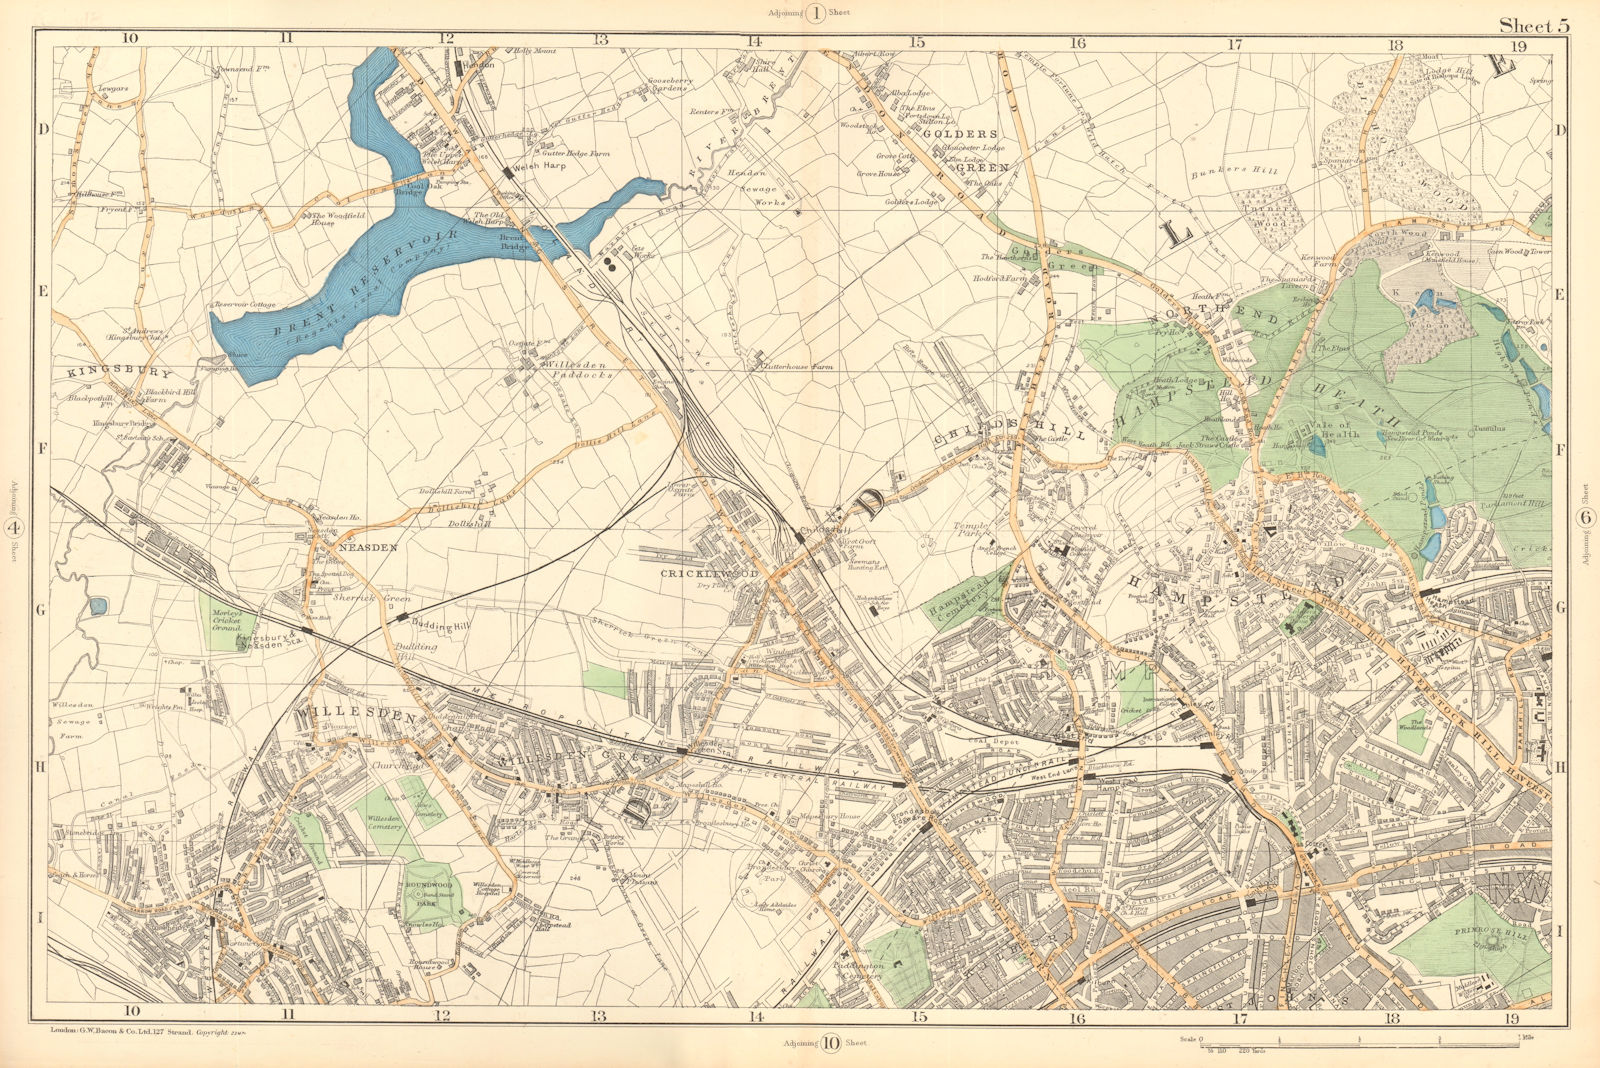 HAMPSTEAD WILLESDEN Cricklewood Golders Green Kilburn Belsize Pk BACON  1903 map